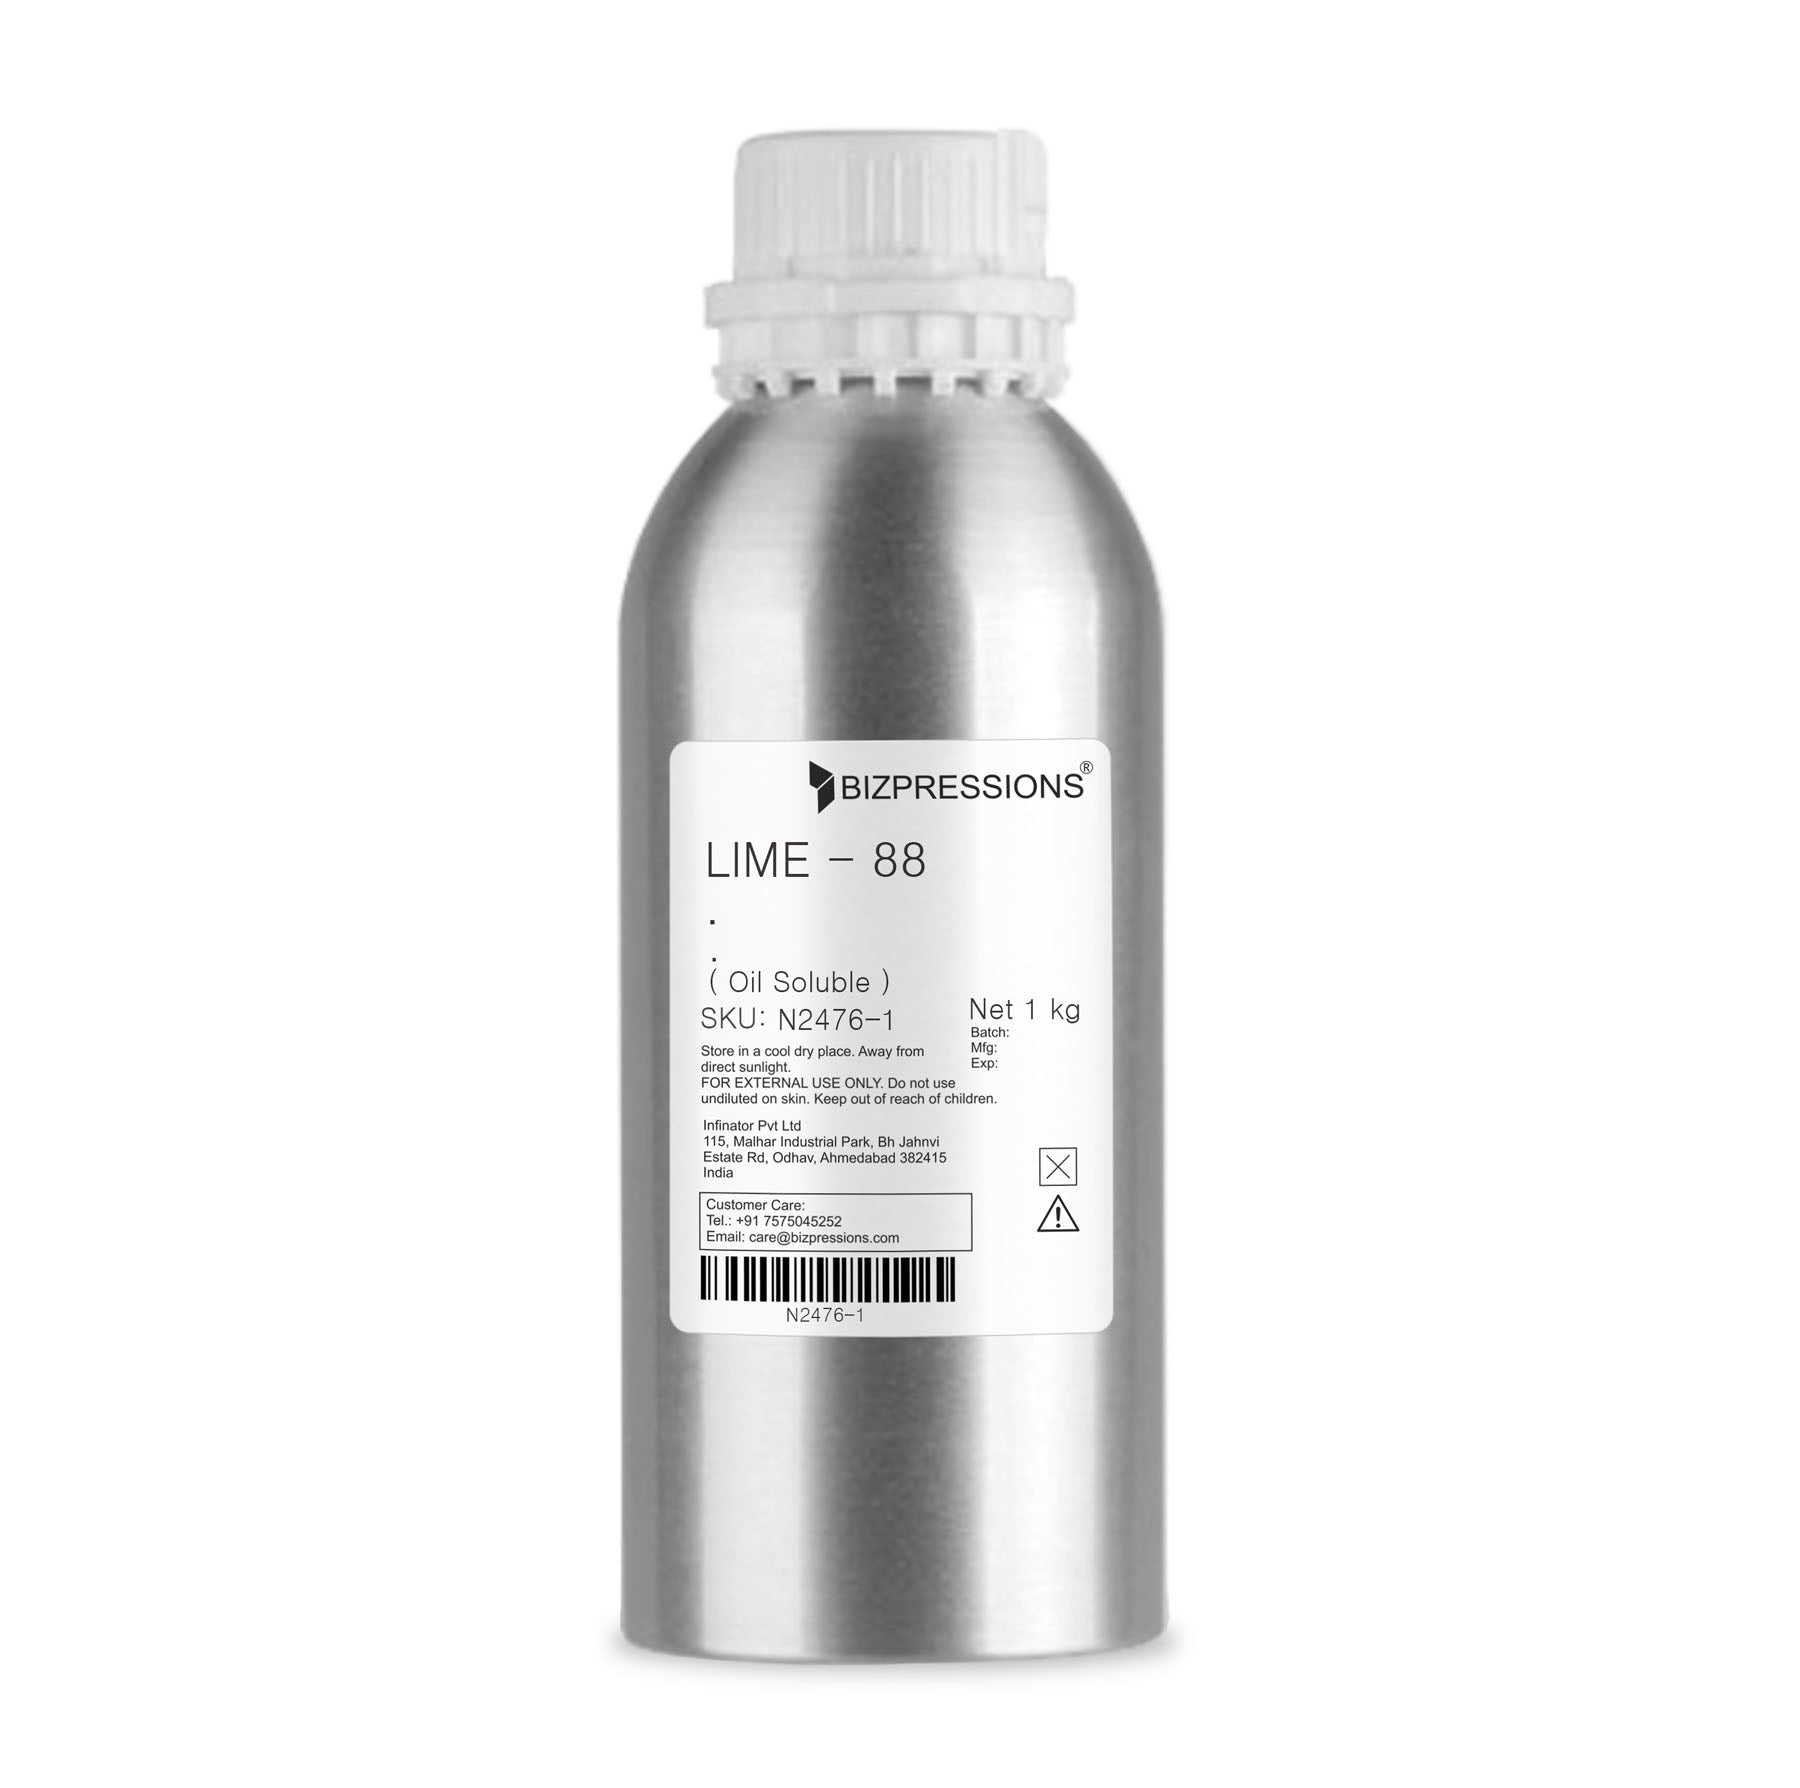 LIME - 88 - Fragrance ( Oil Soluble ) - 1 kg